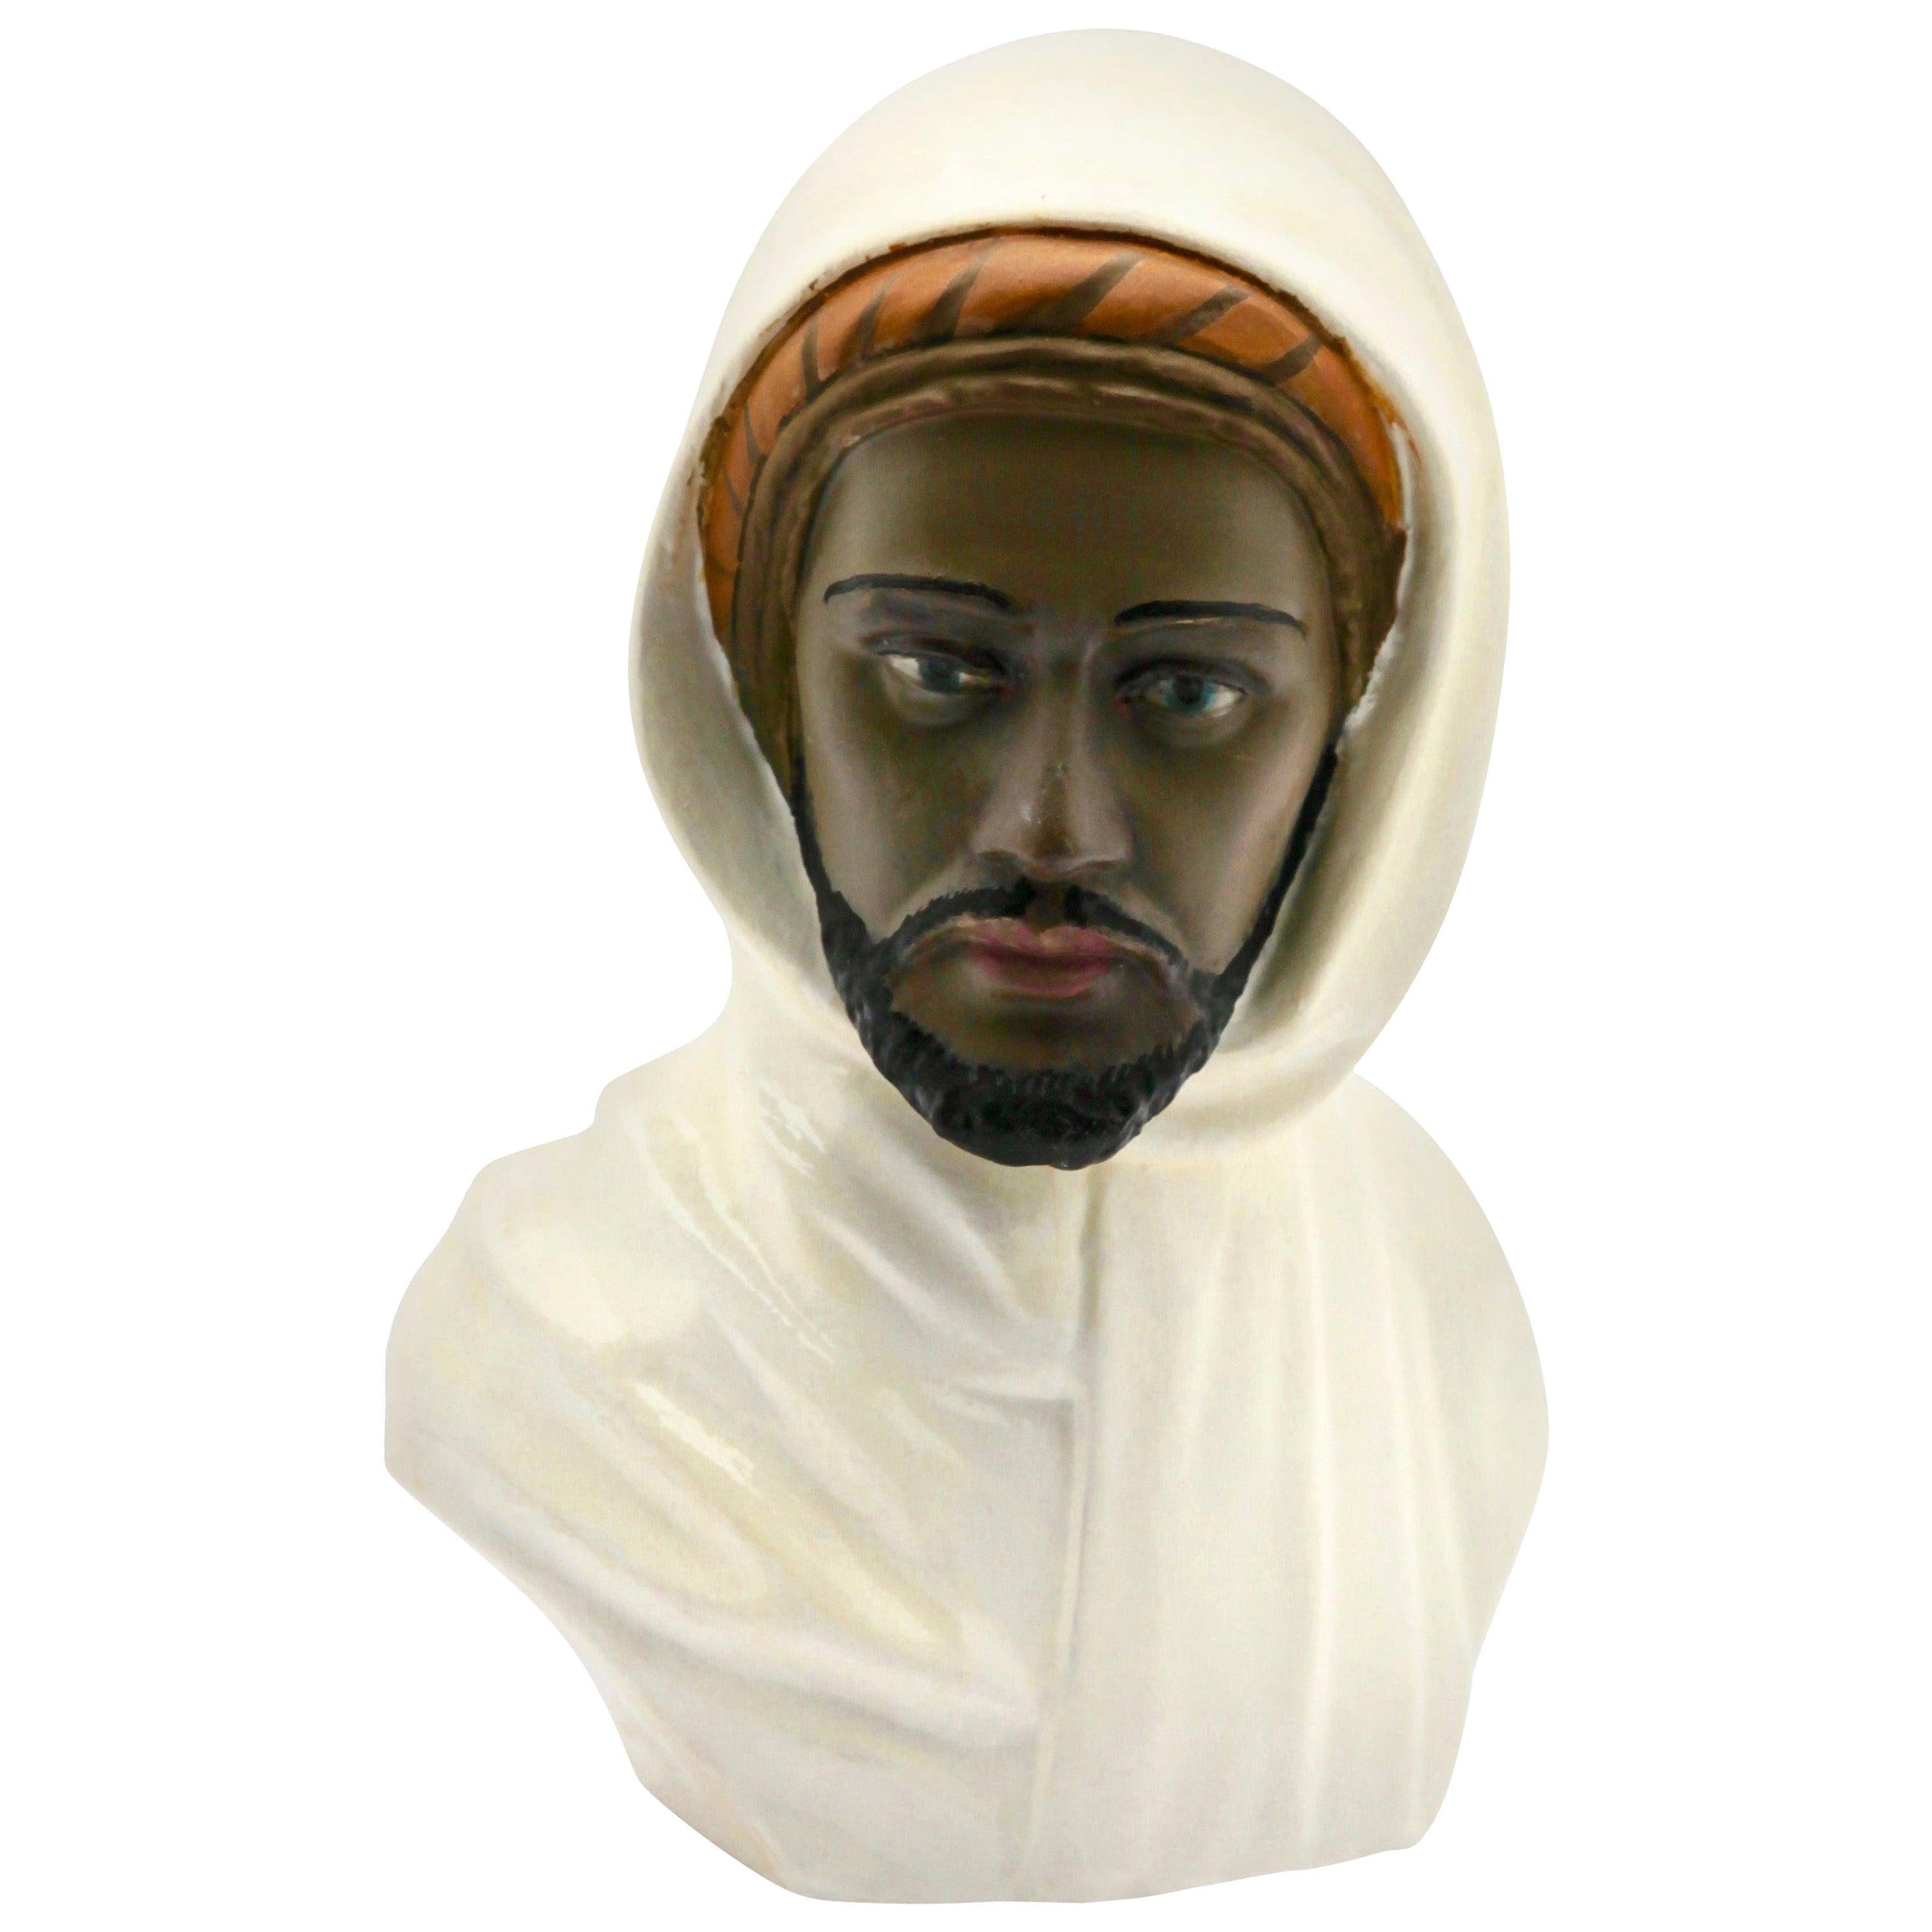 Guiseppe Carli Firmado, Busto de cerámica policromada de una cabeza árabe